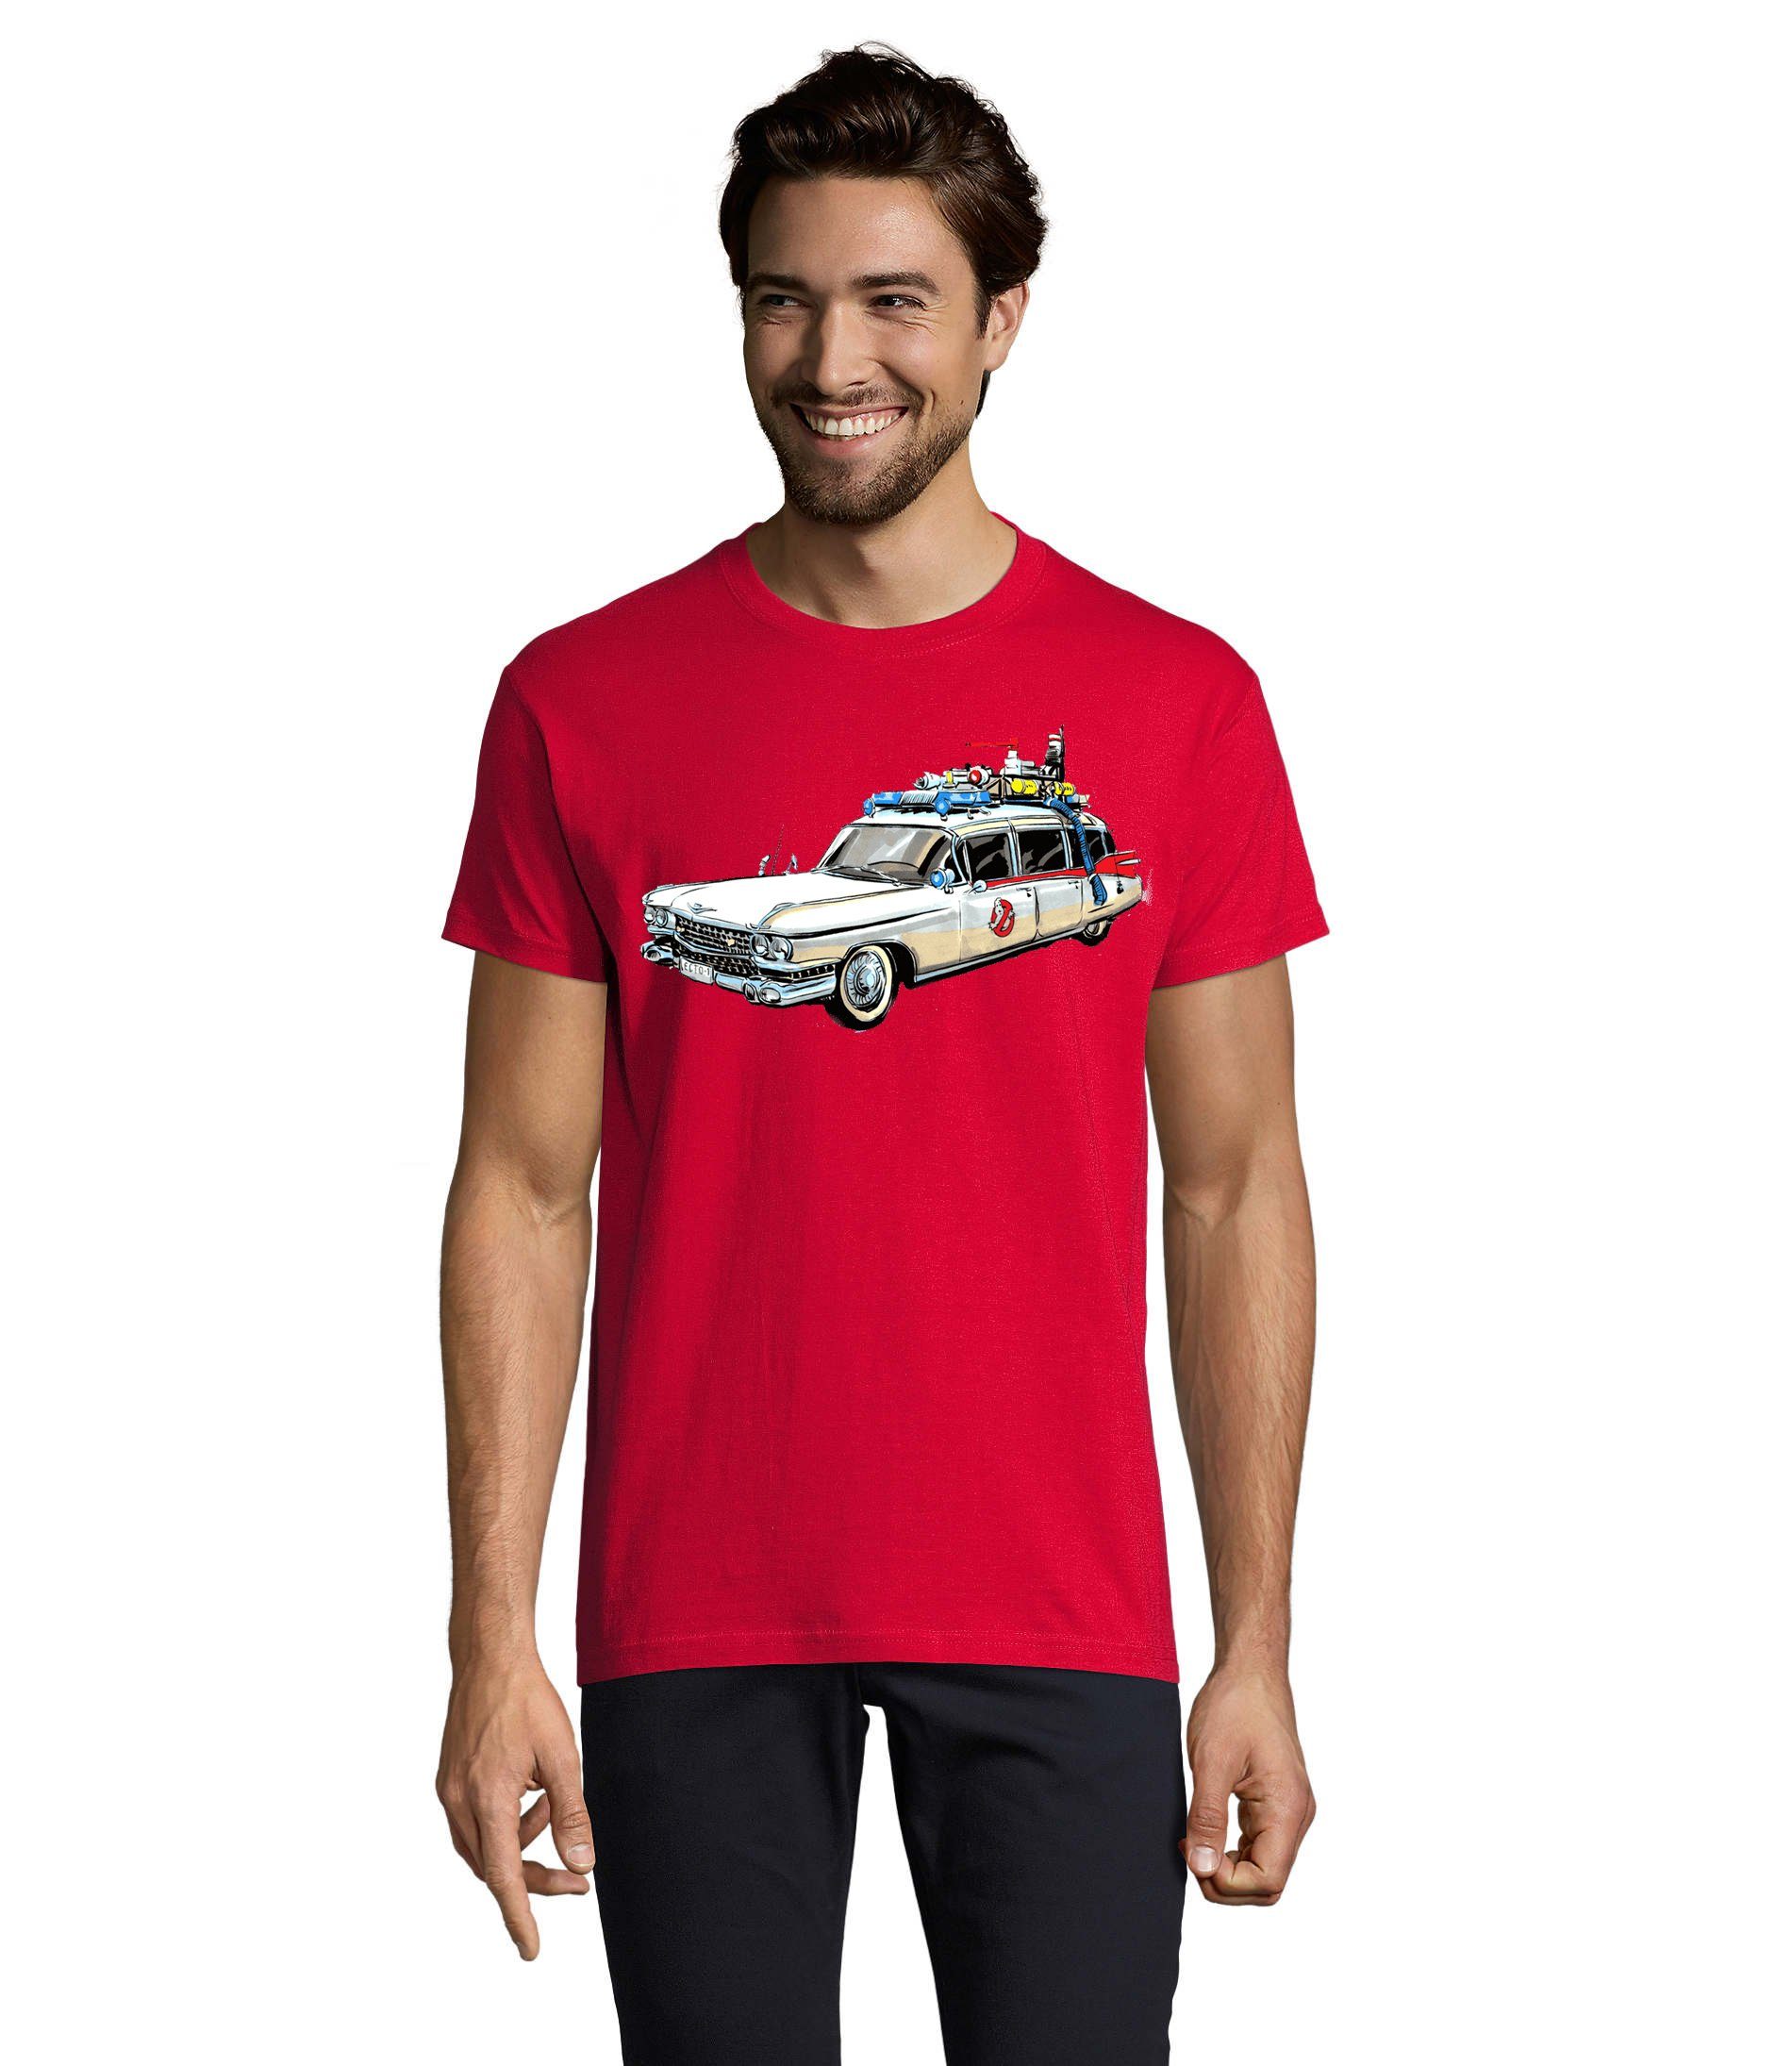 Blondie & Brownie T-Shirt Herren Ghostbusters Cars Auto Geisterjäger Geister Film Ghost Rot